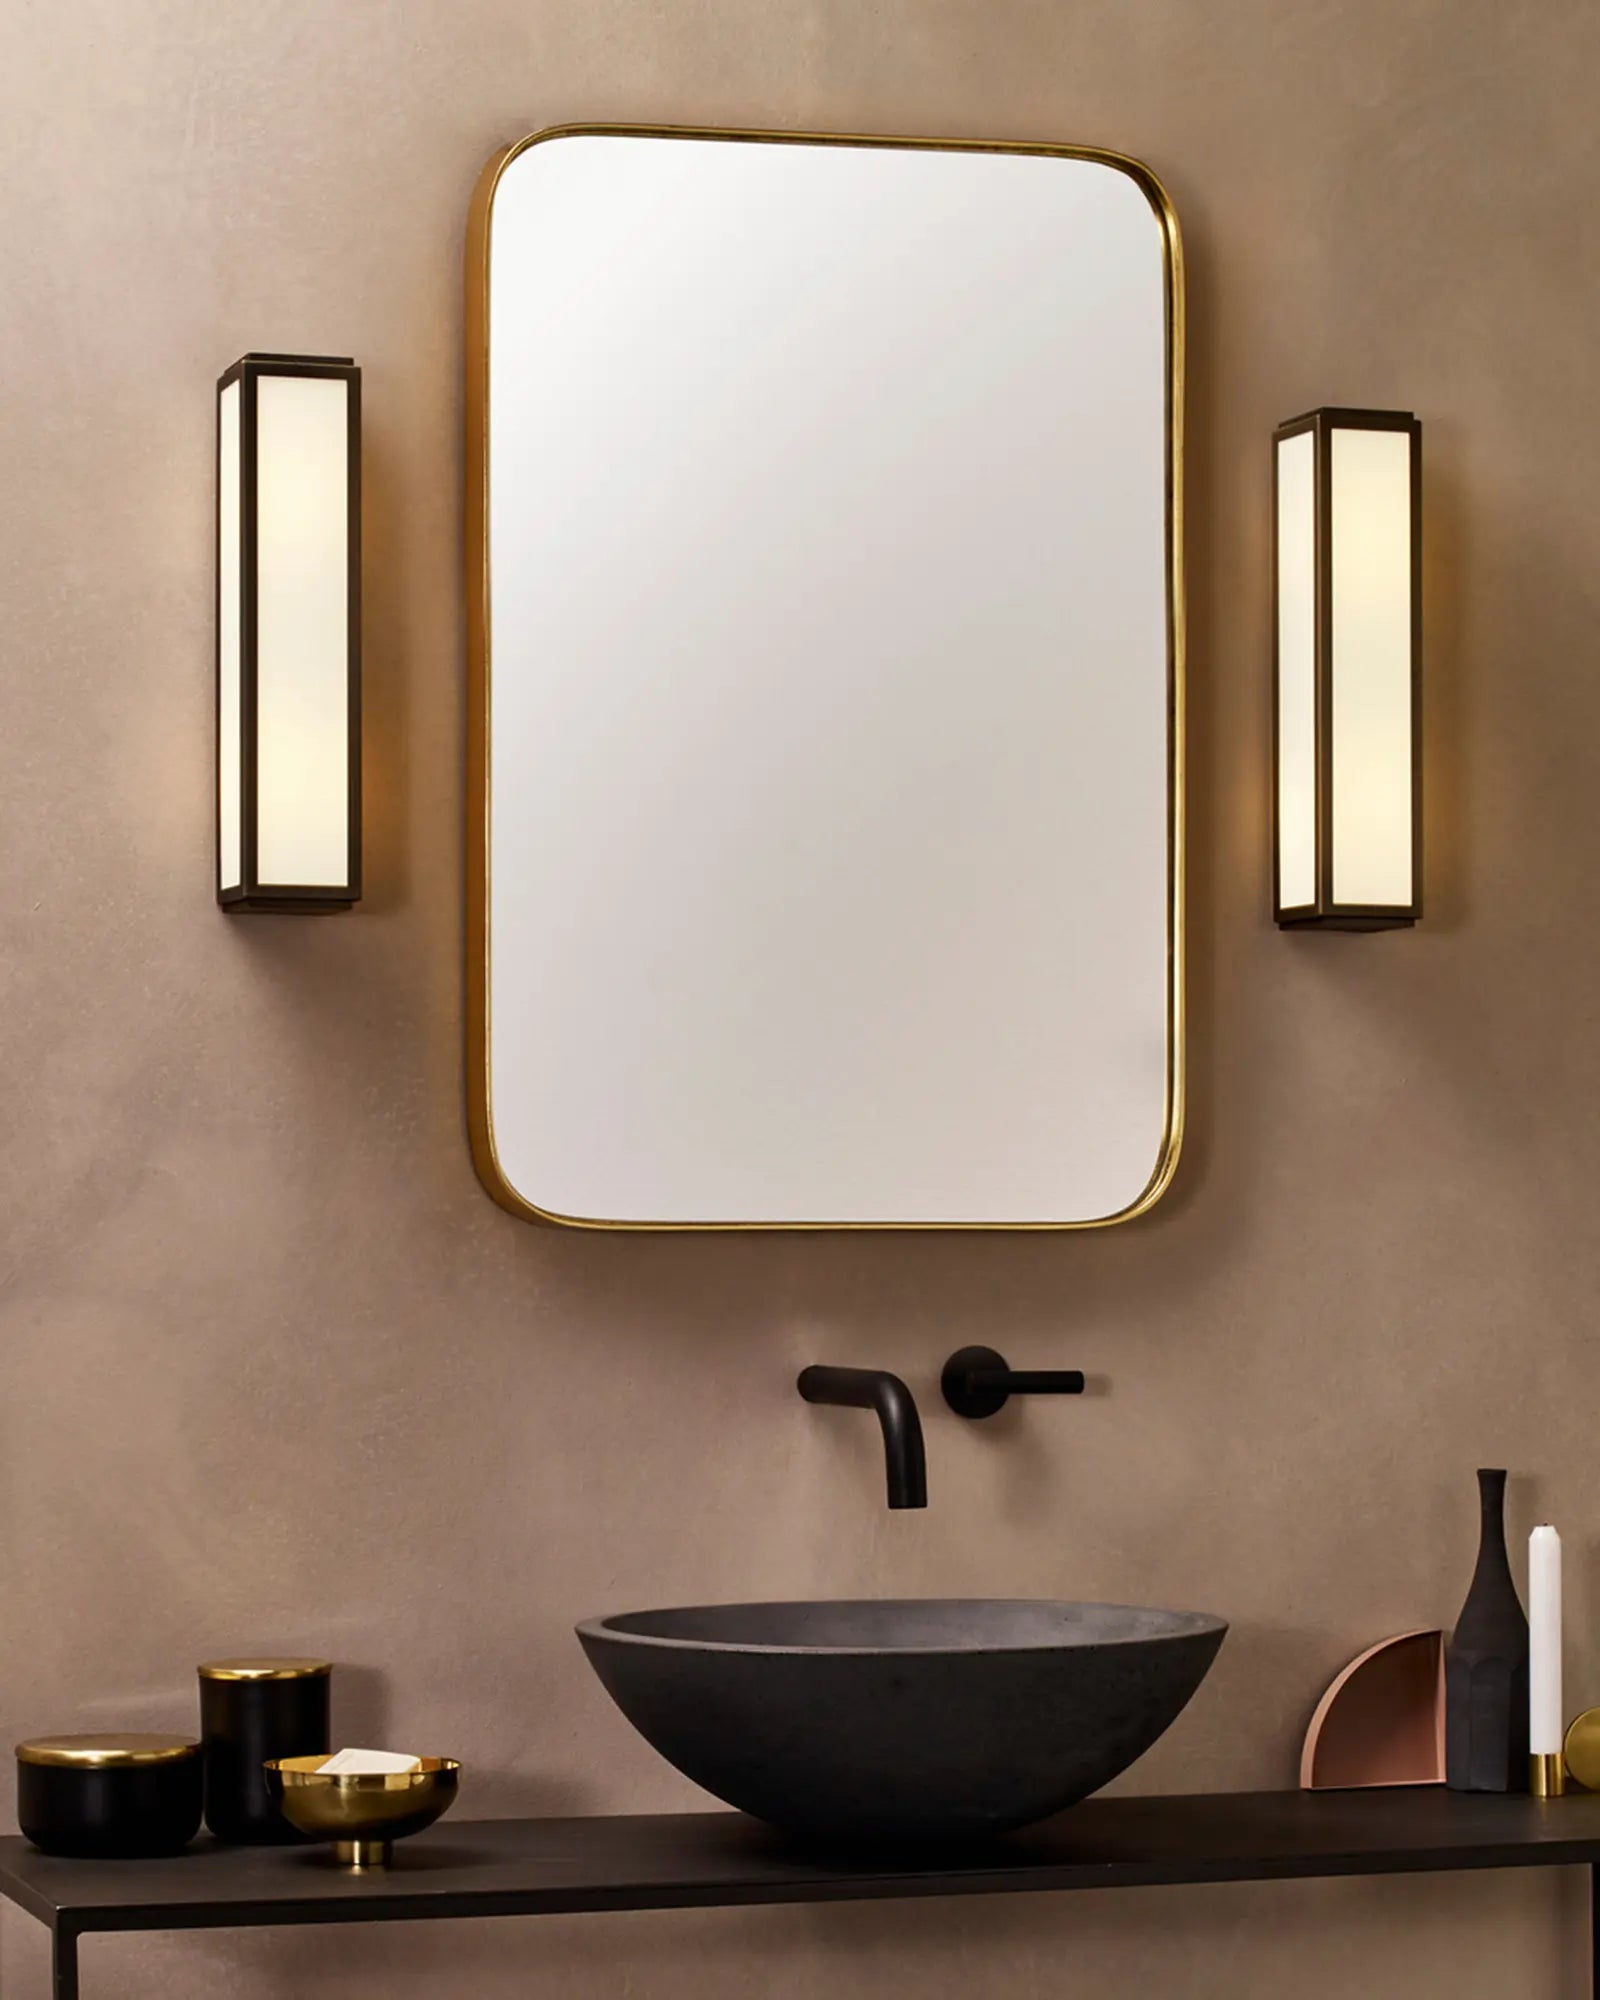 Mashiko metal and glass contemporary bathroom wall light mirror's sides